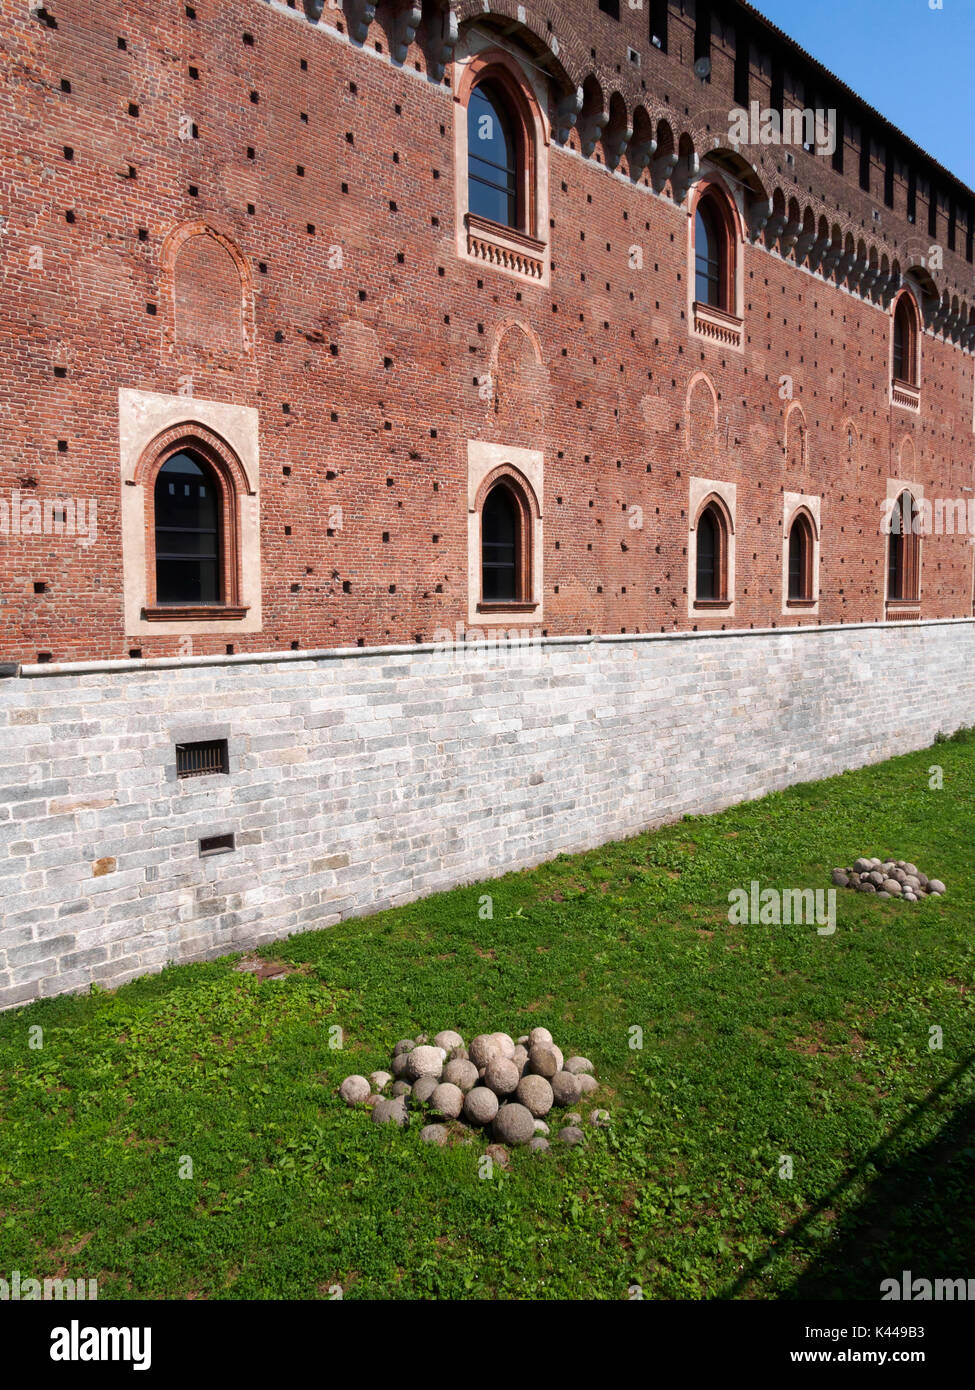 Sforza Castle wall, Milan, Italy Stock Photo - Alamy